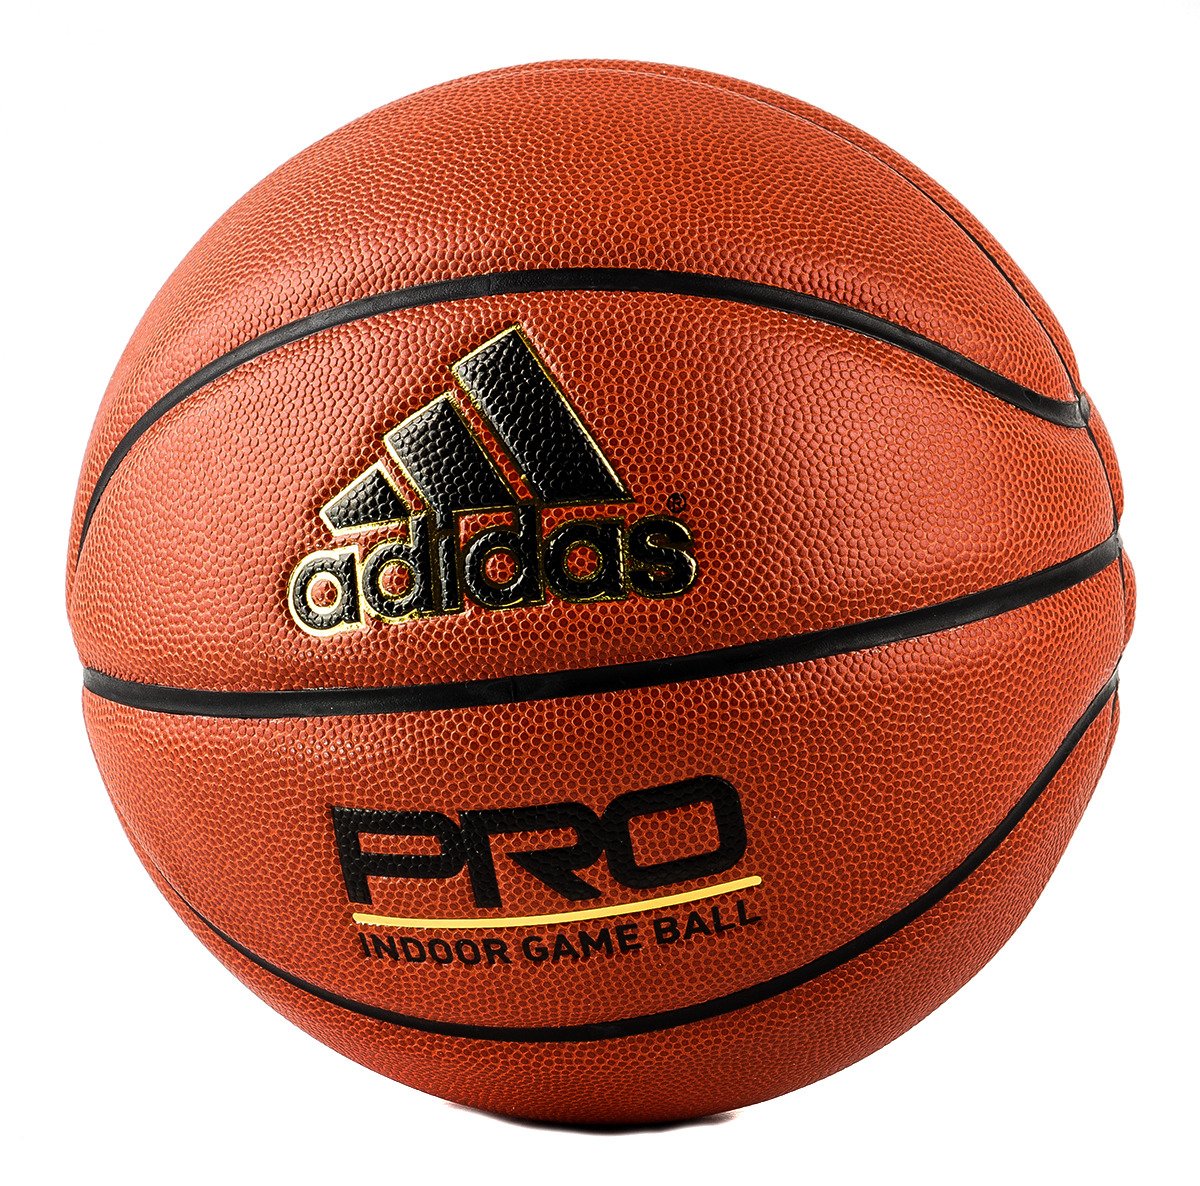 Adidas NEW PRO Indoor Game Basketball 